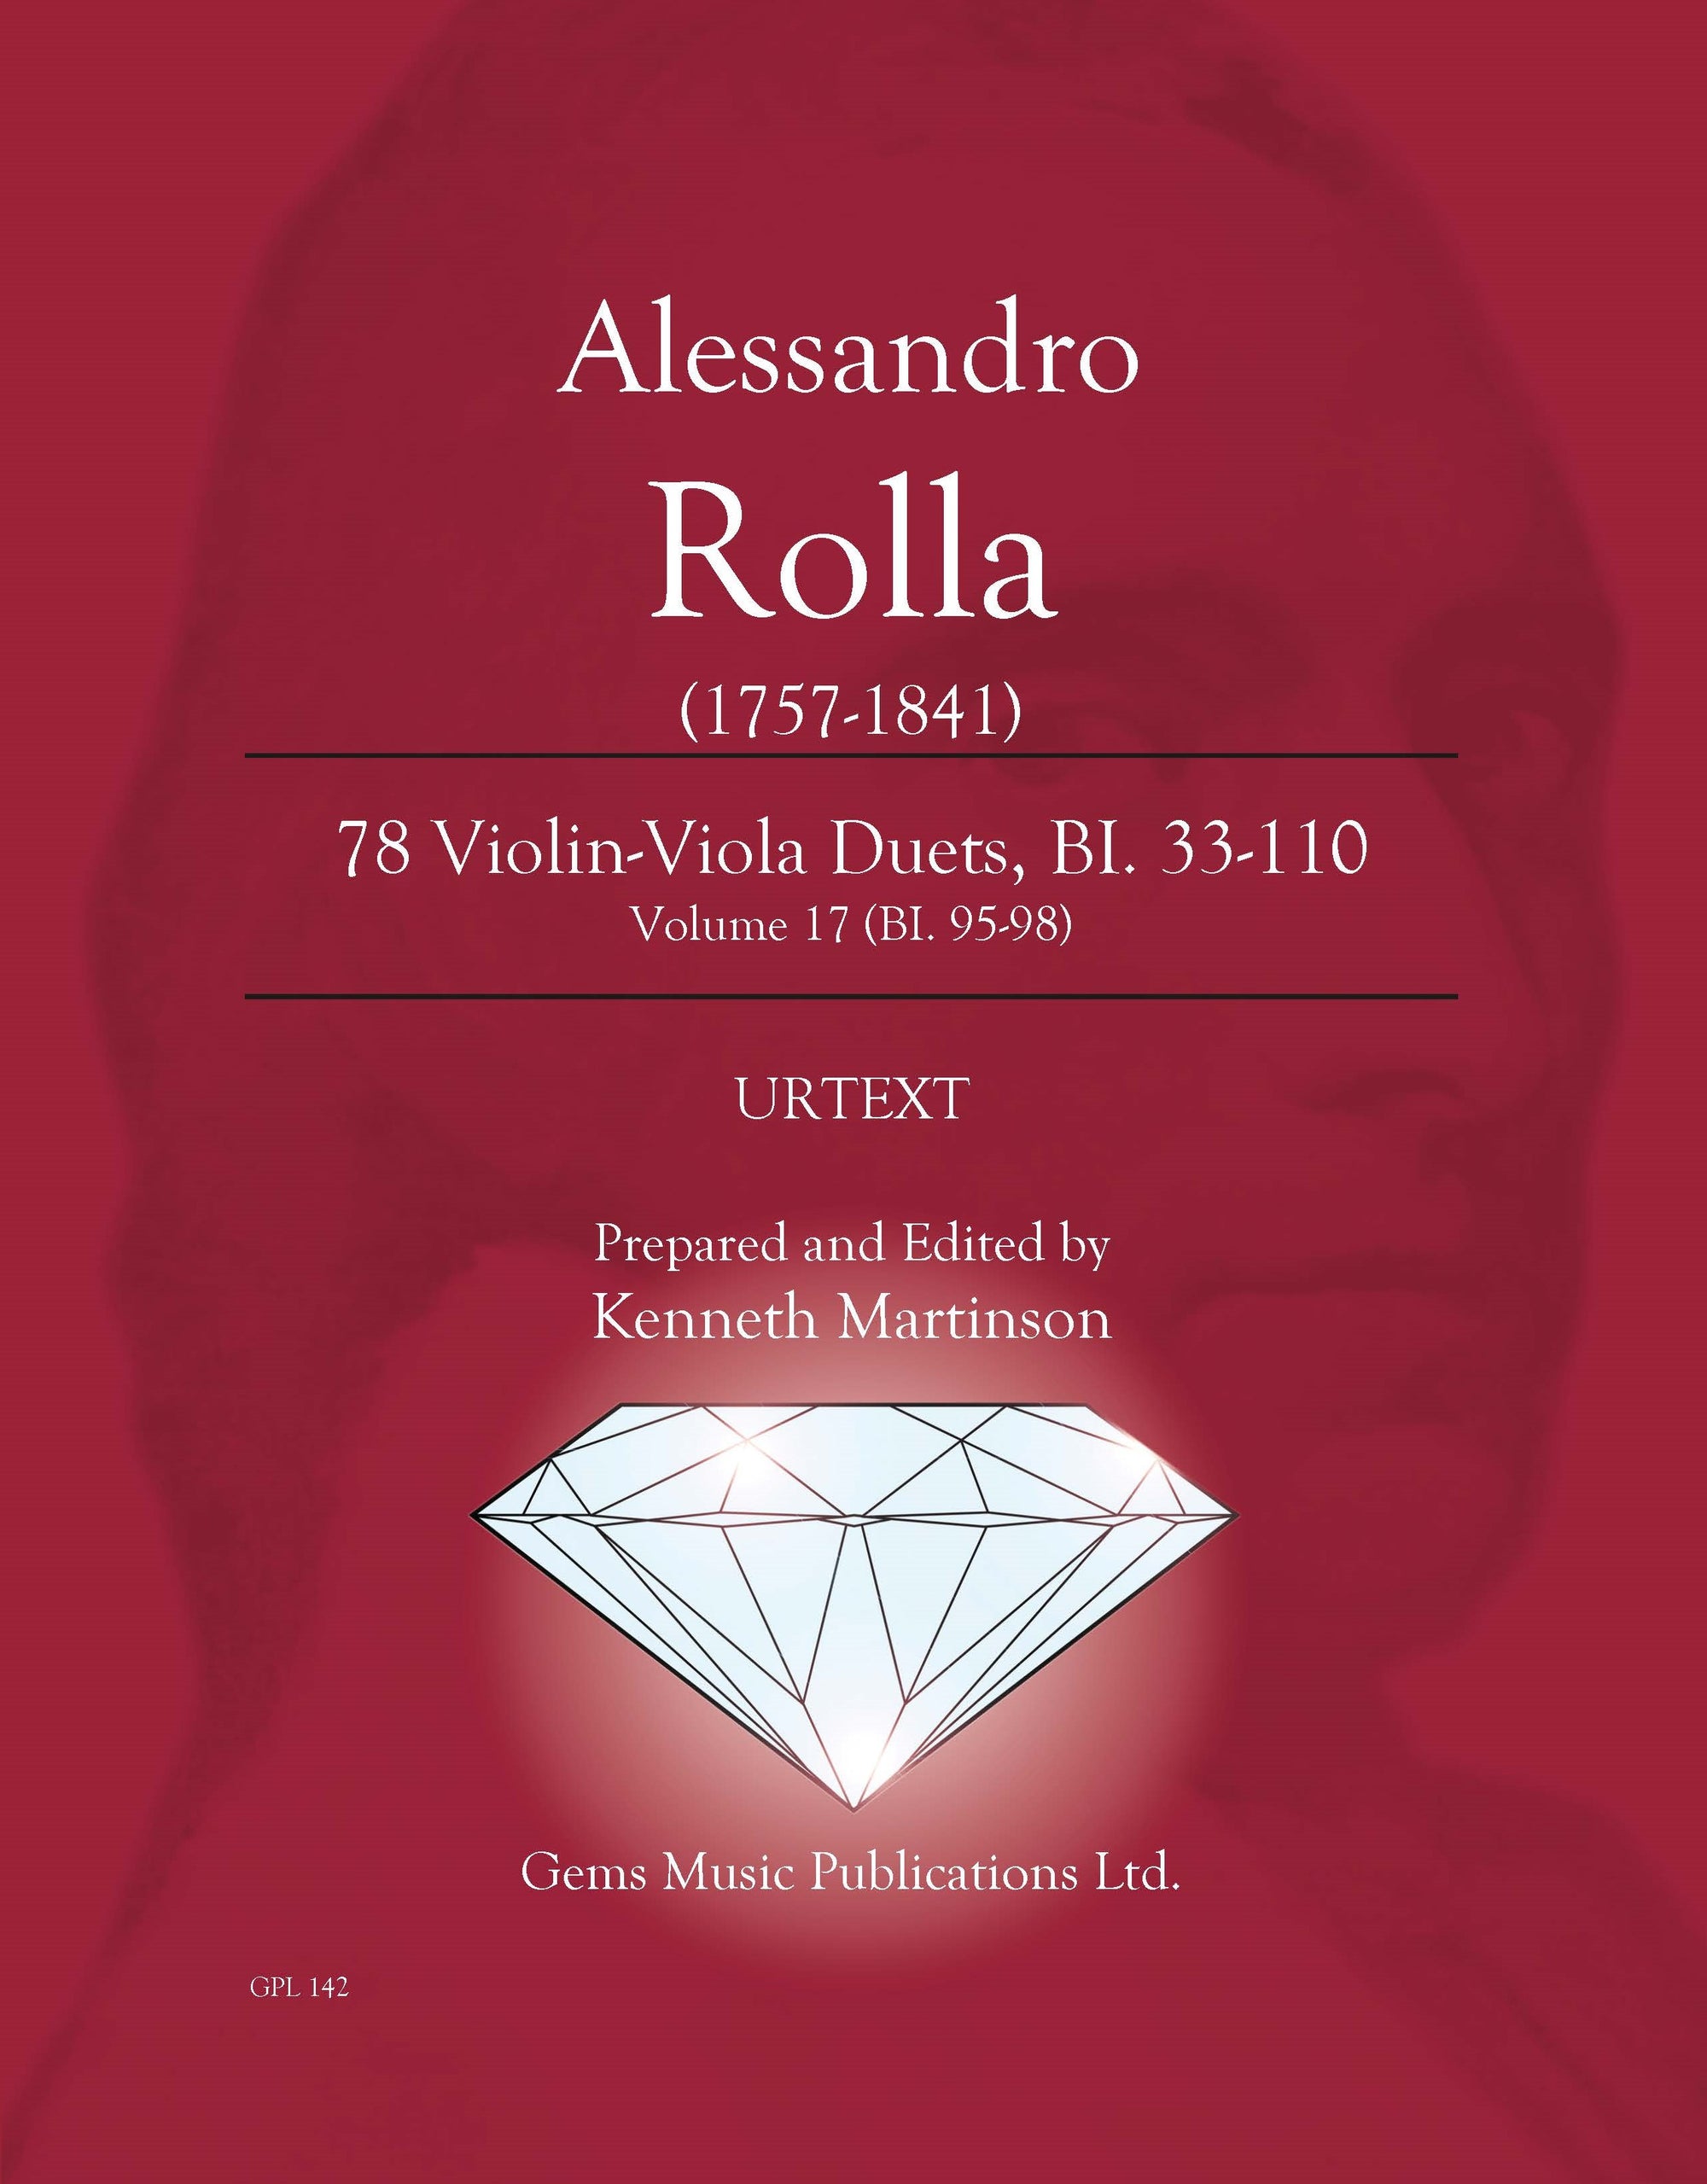 Rolla: Violin-Viola Duets - Volume 17 (BI. 95-98)